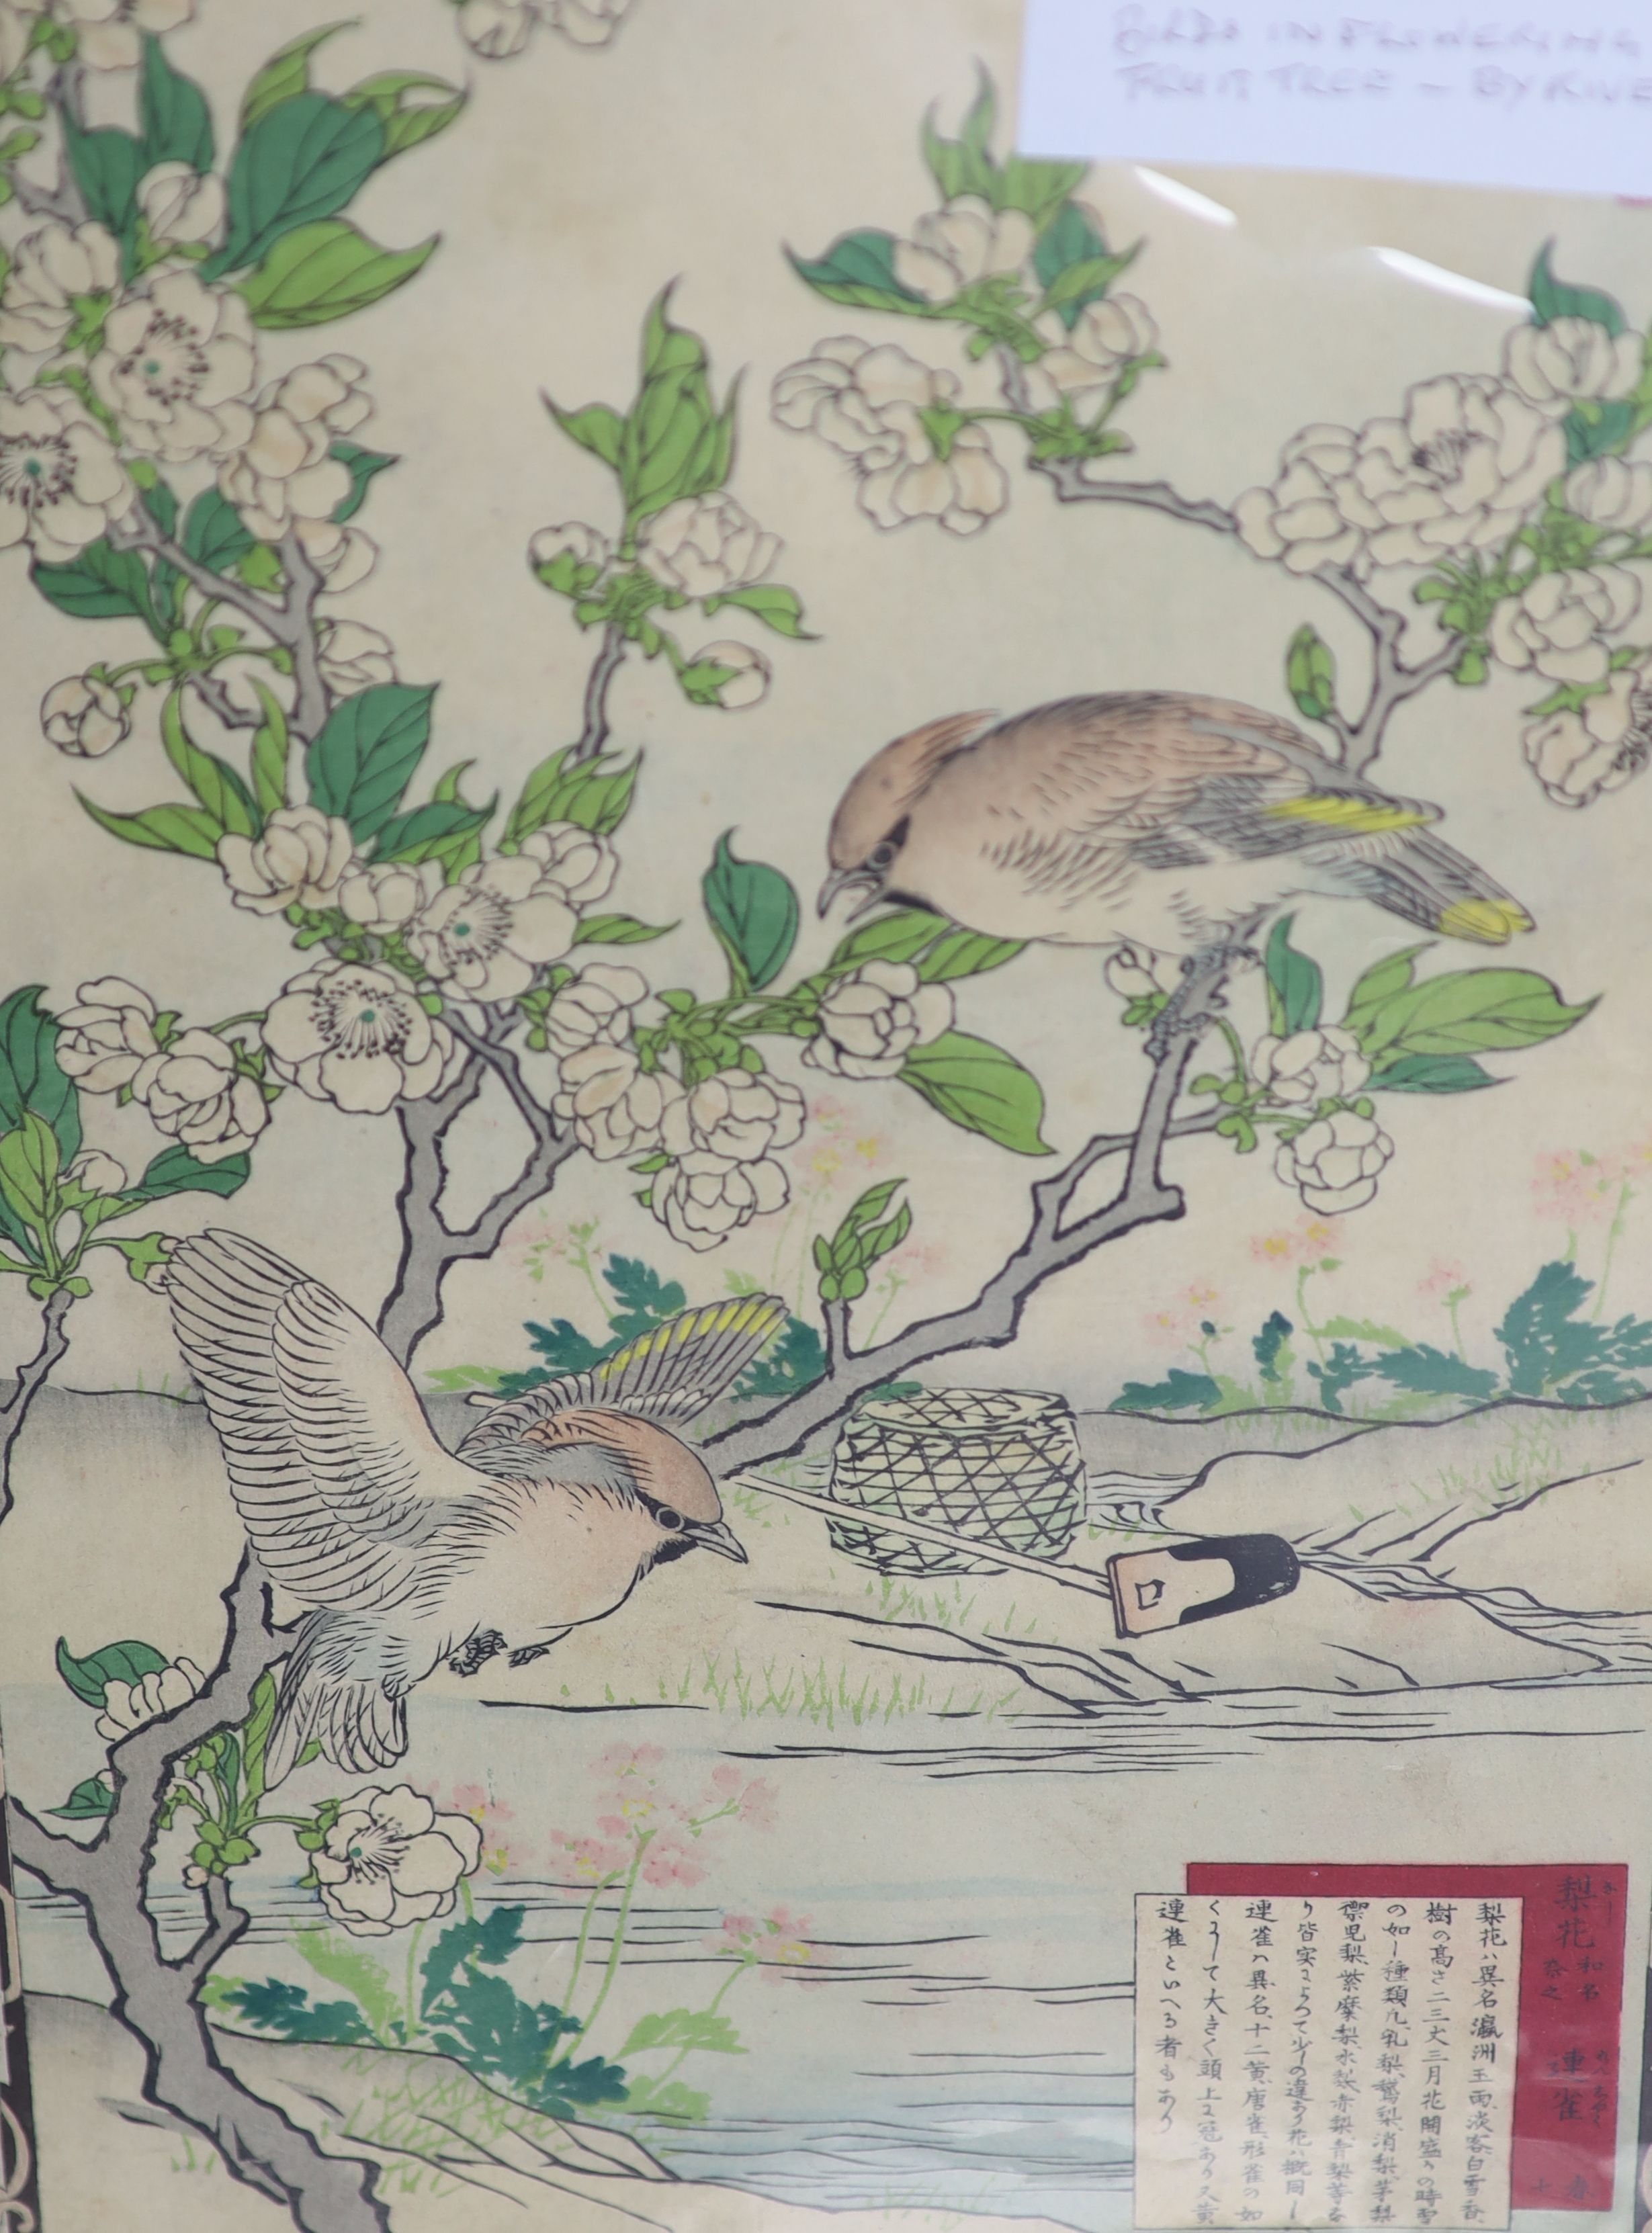 An album of 19th / 20th century Japanese woodblock prints to include works by Kunisada (diptych), Hiroshige, Shoen, Harunobu, Suzuki, Kunimasa IV, Hokki, Kunichika, Kunika, etc.